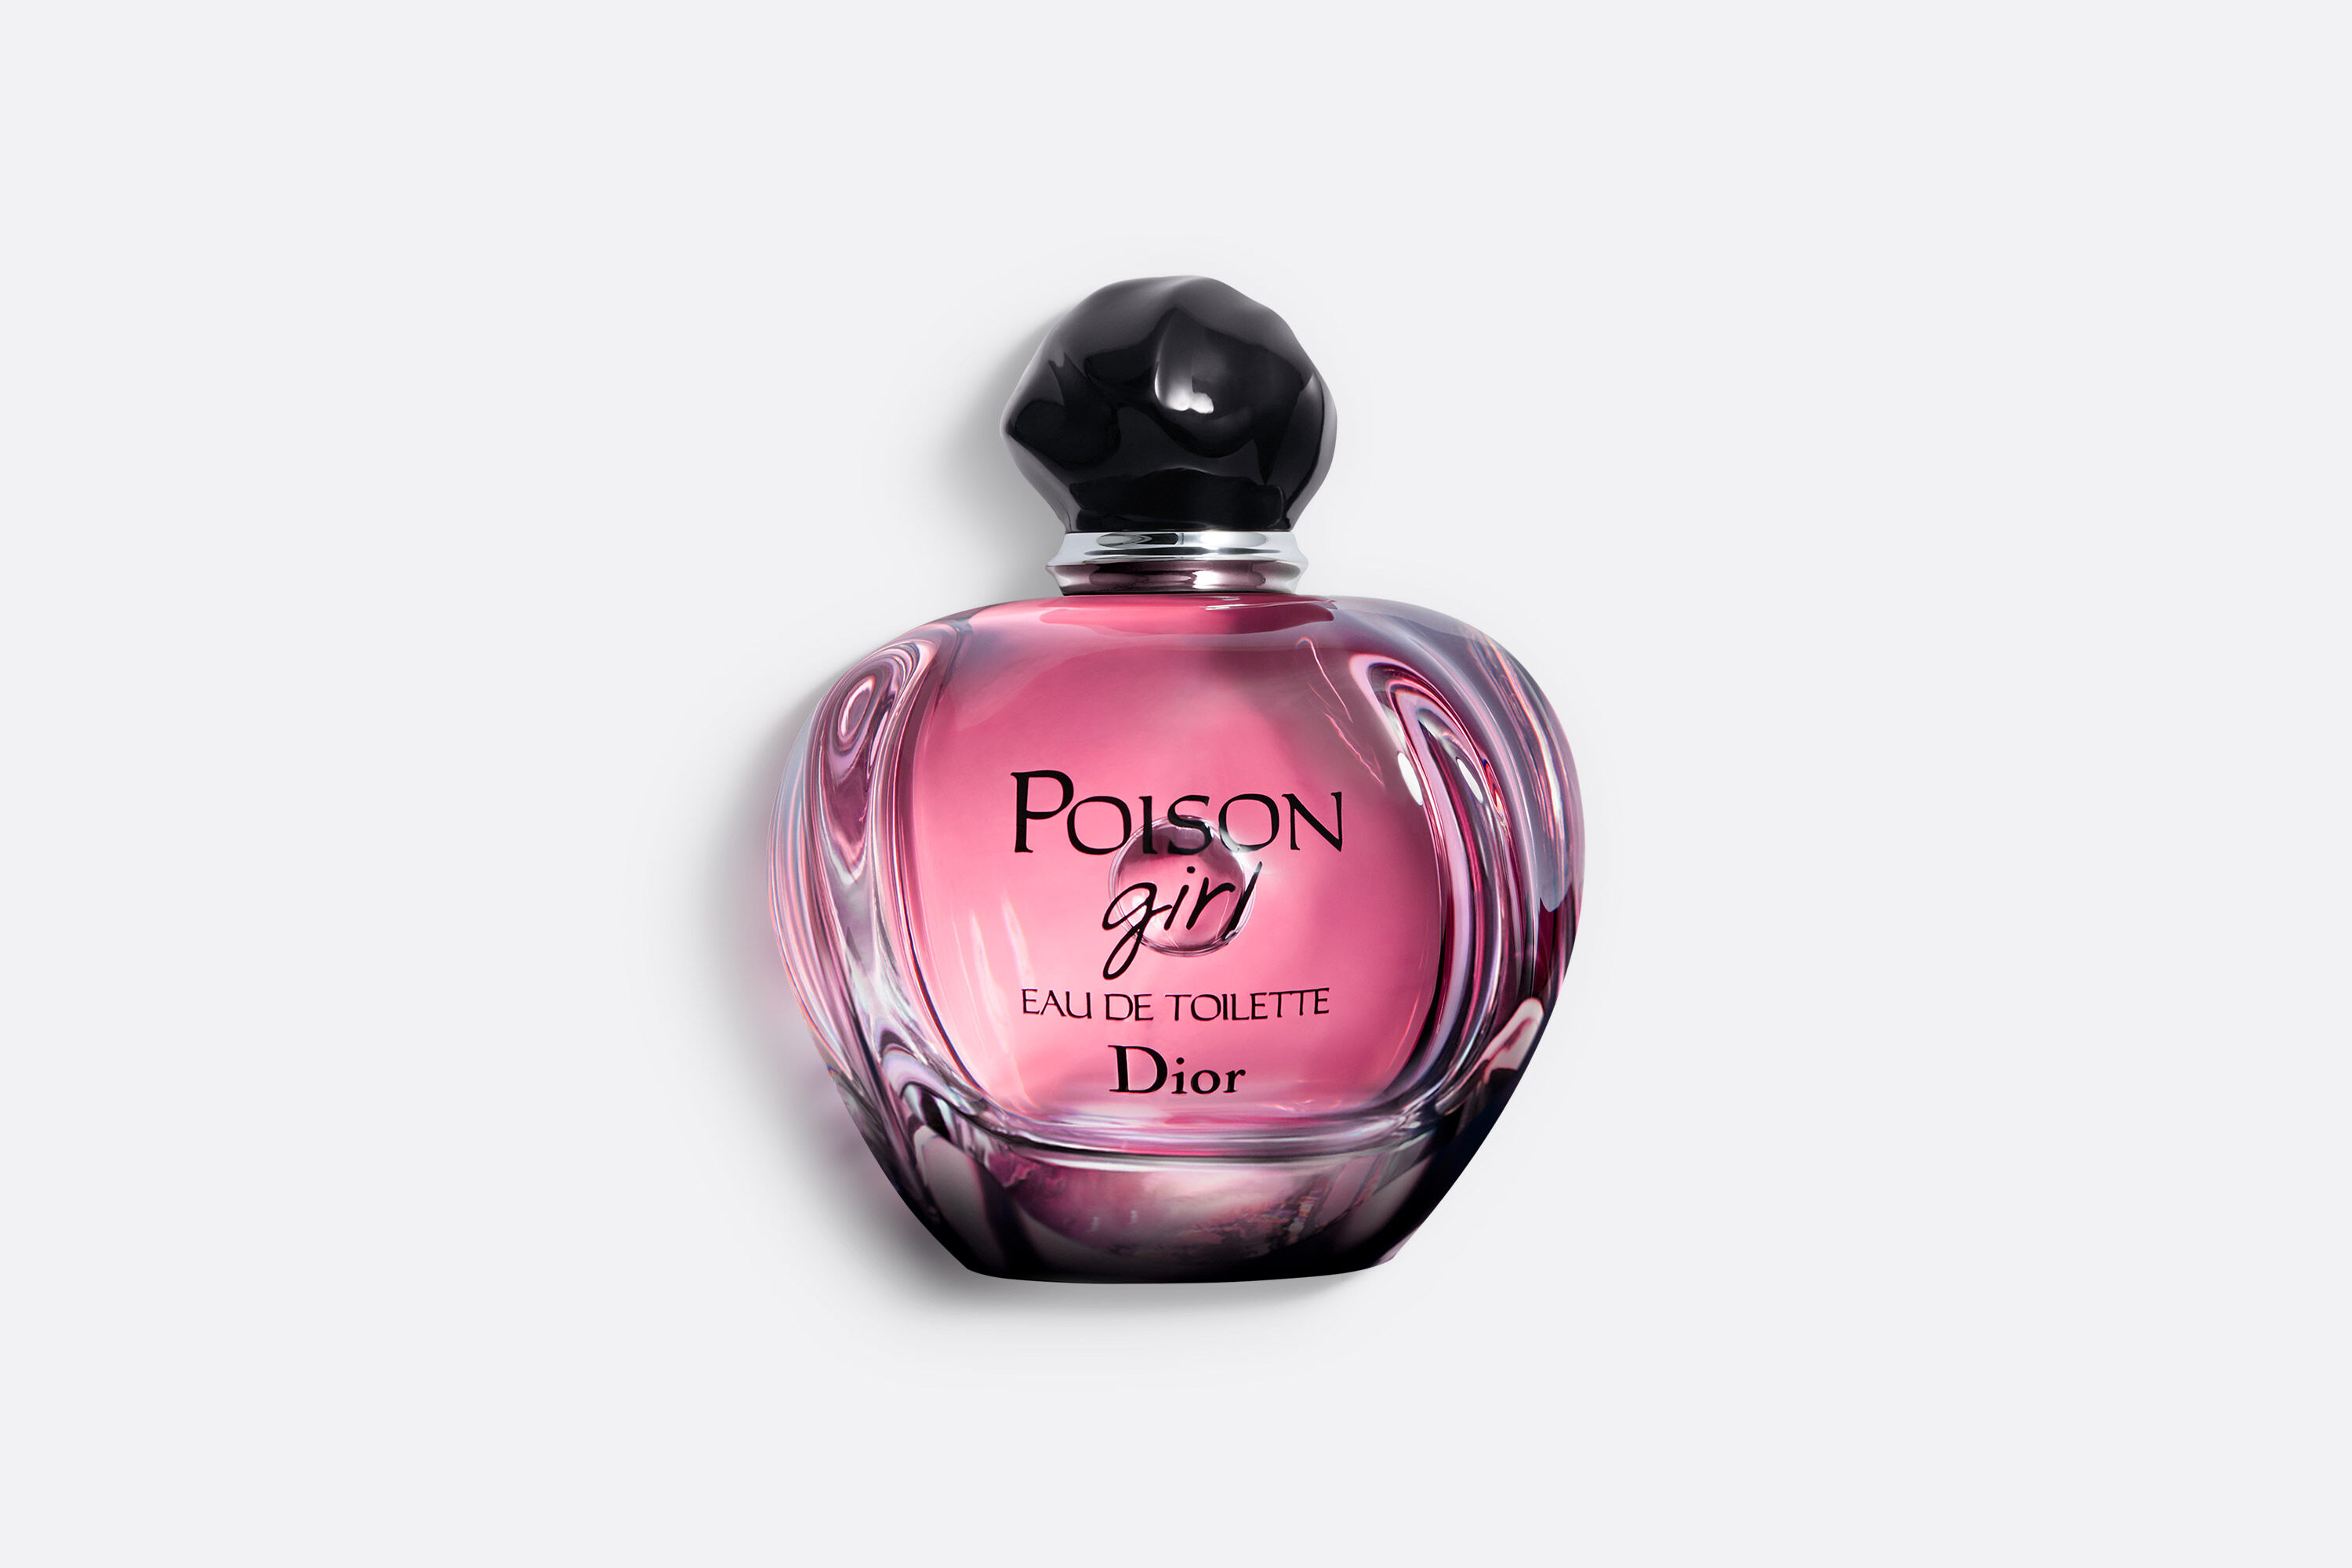 Pickering Doe alles met mijn kracht Adviseur Poison Girl Eau de Parfum - Women's Fragrance | DIOR